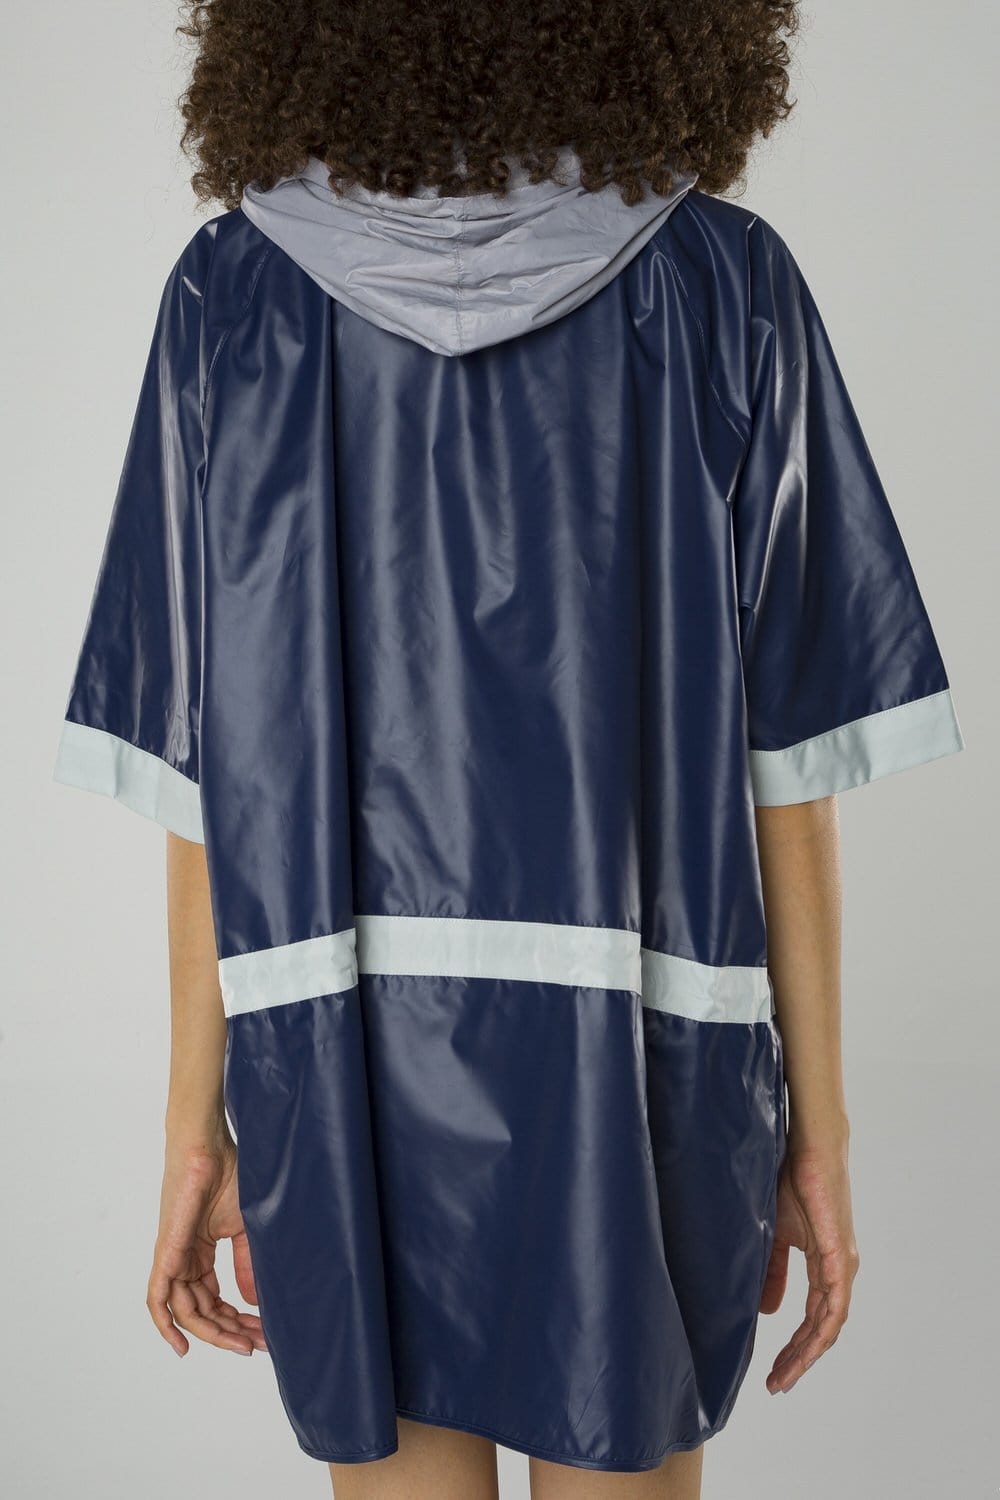 "Wear the ocean" raincoat